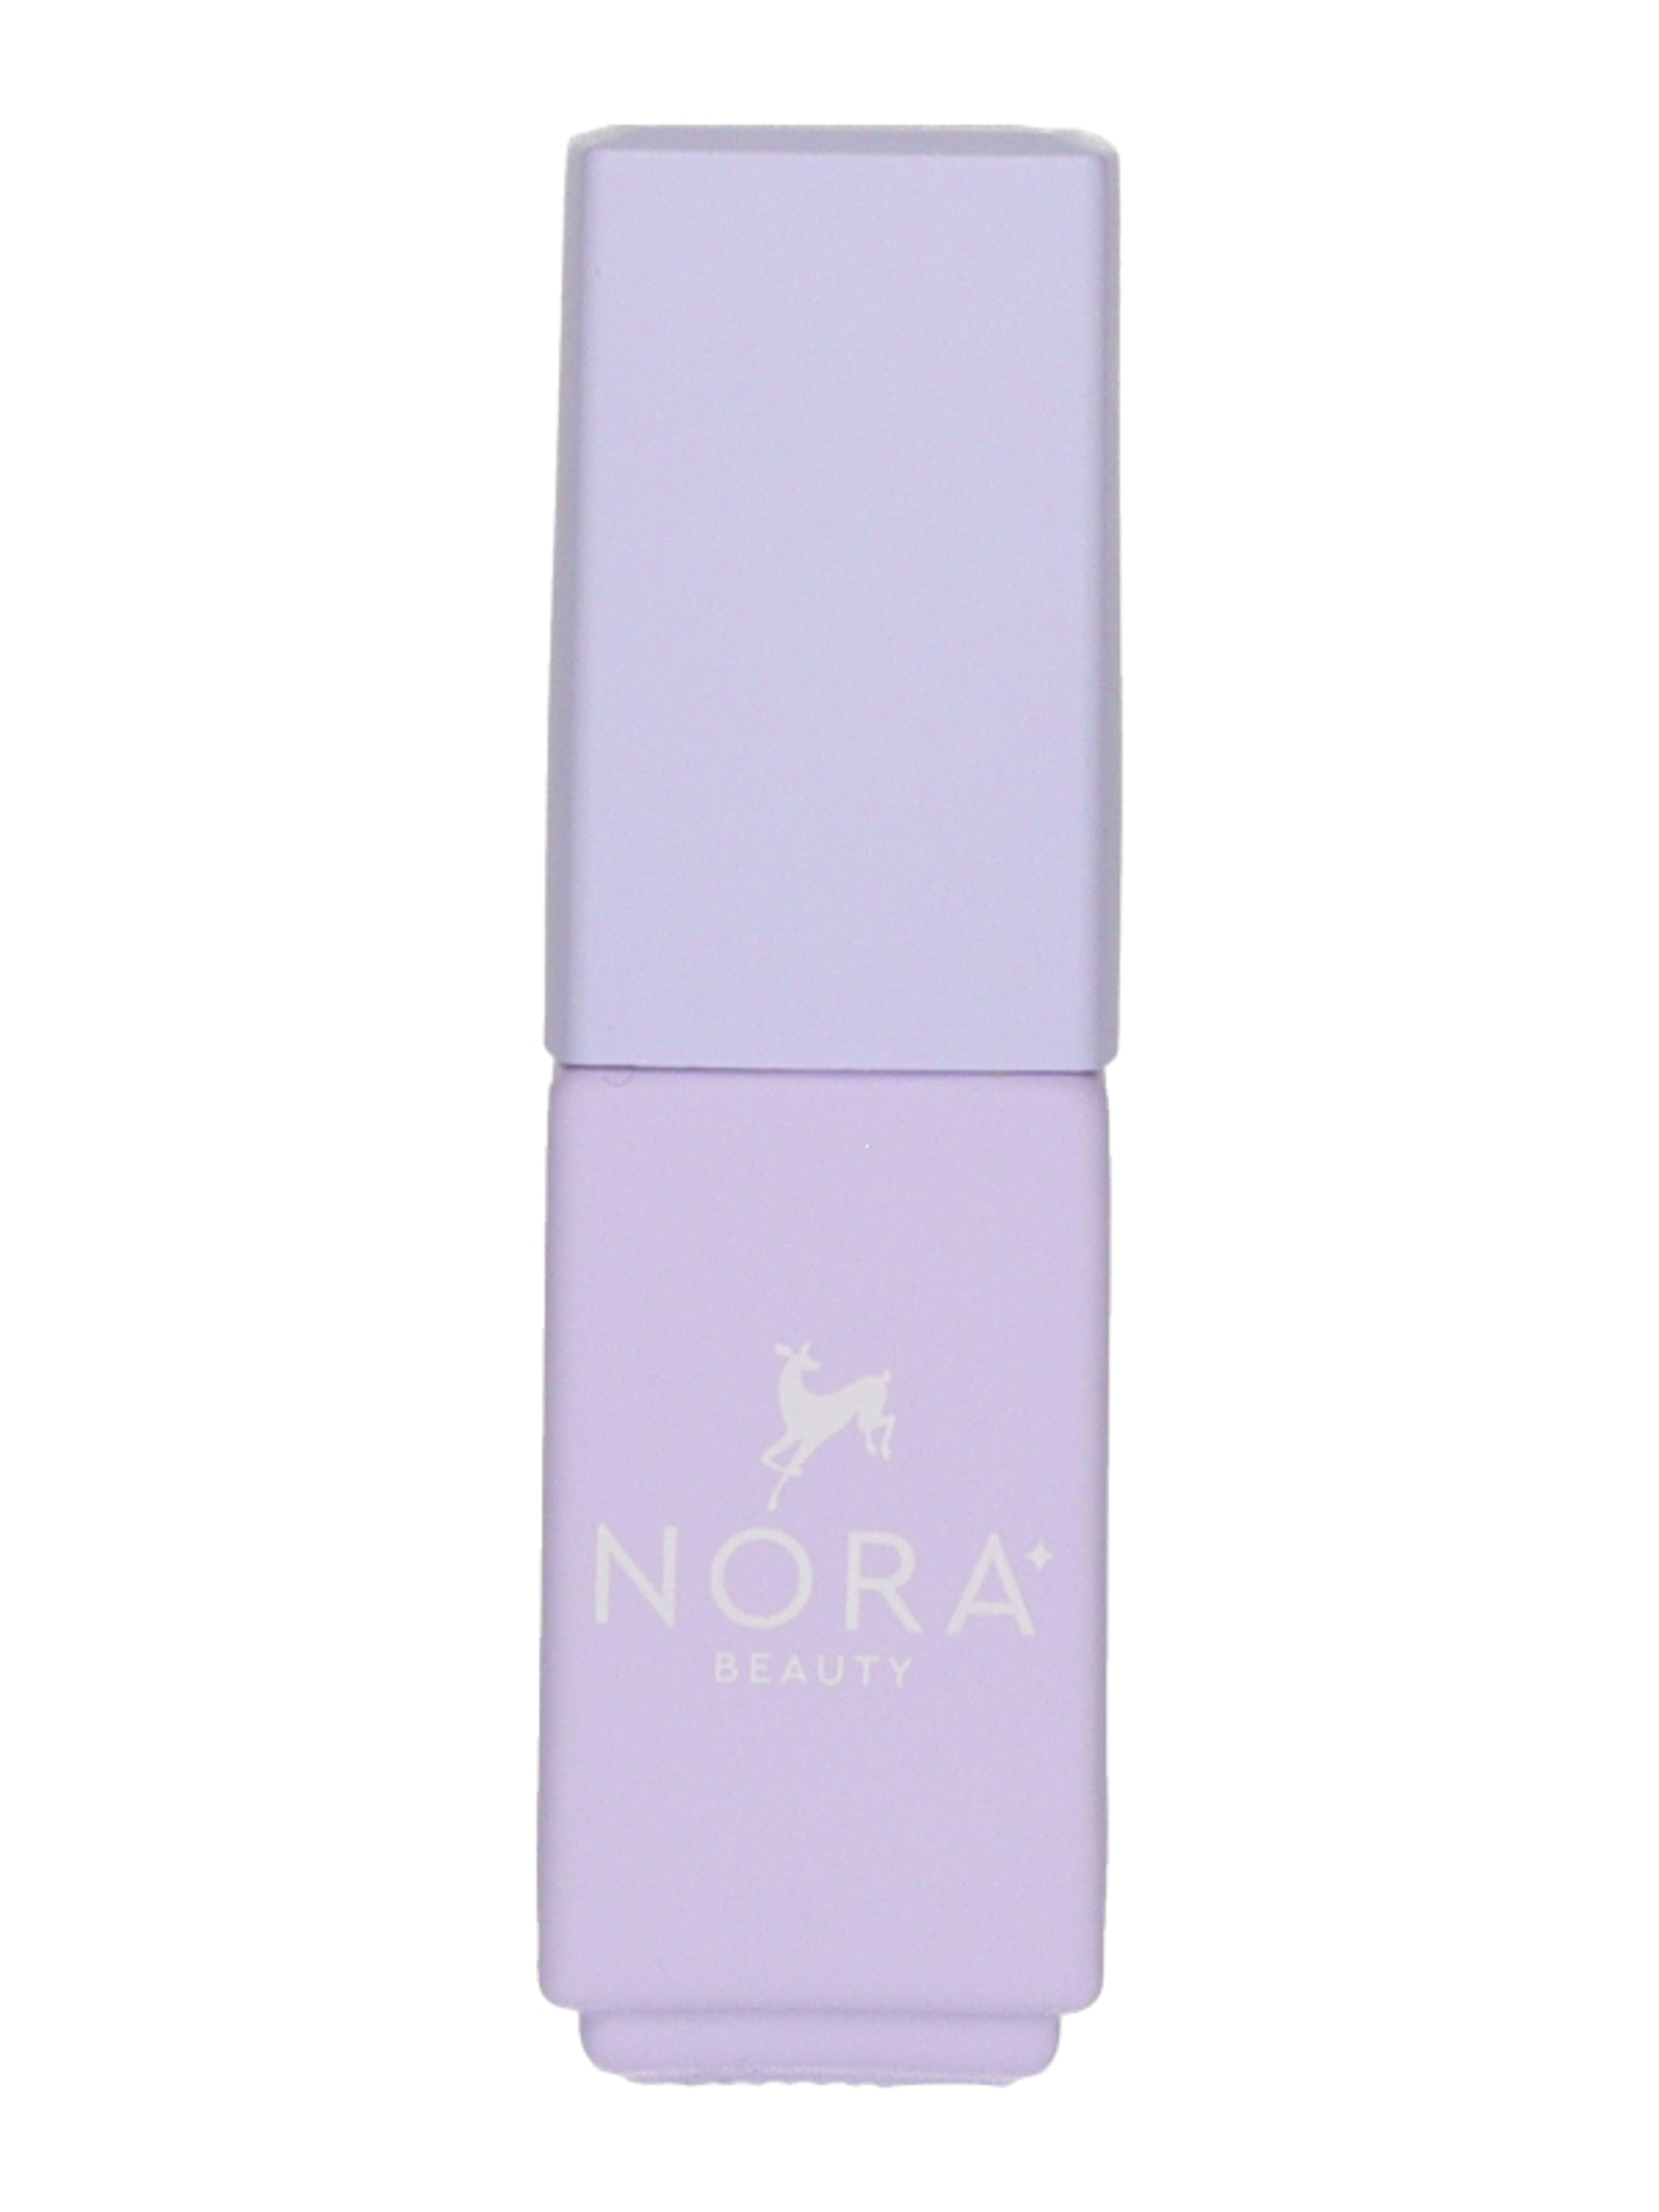 NoraBeauty UV lakkzselé /cn-03 deep purple - 1 db-3